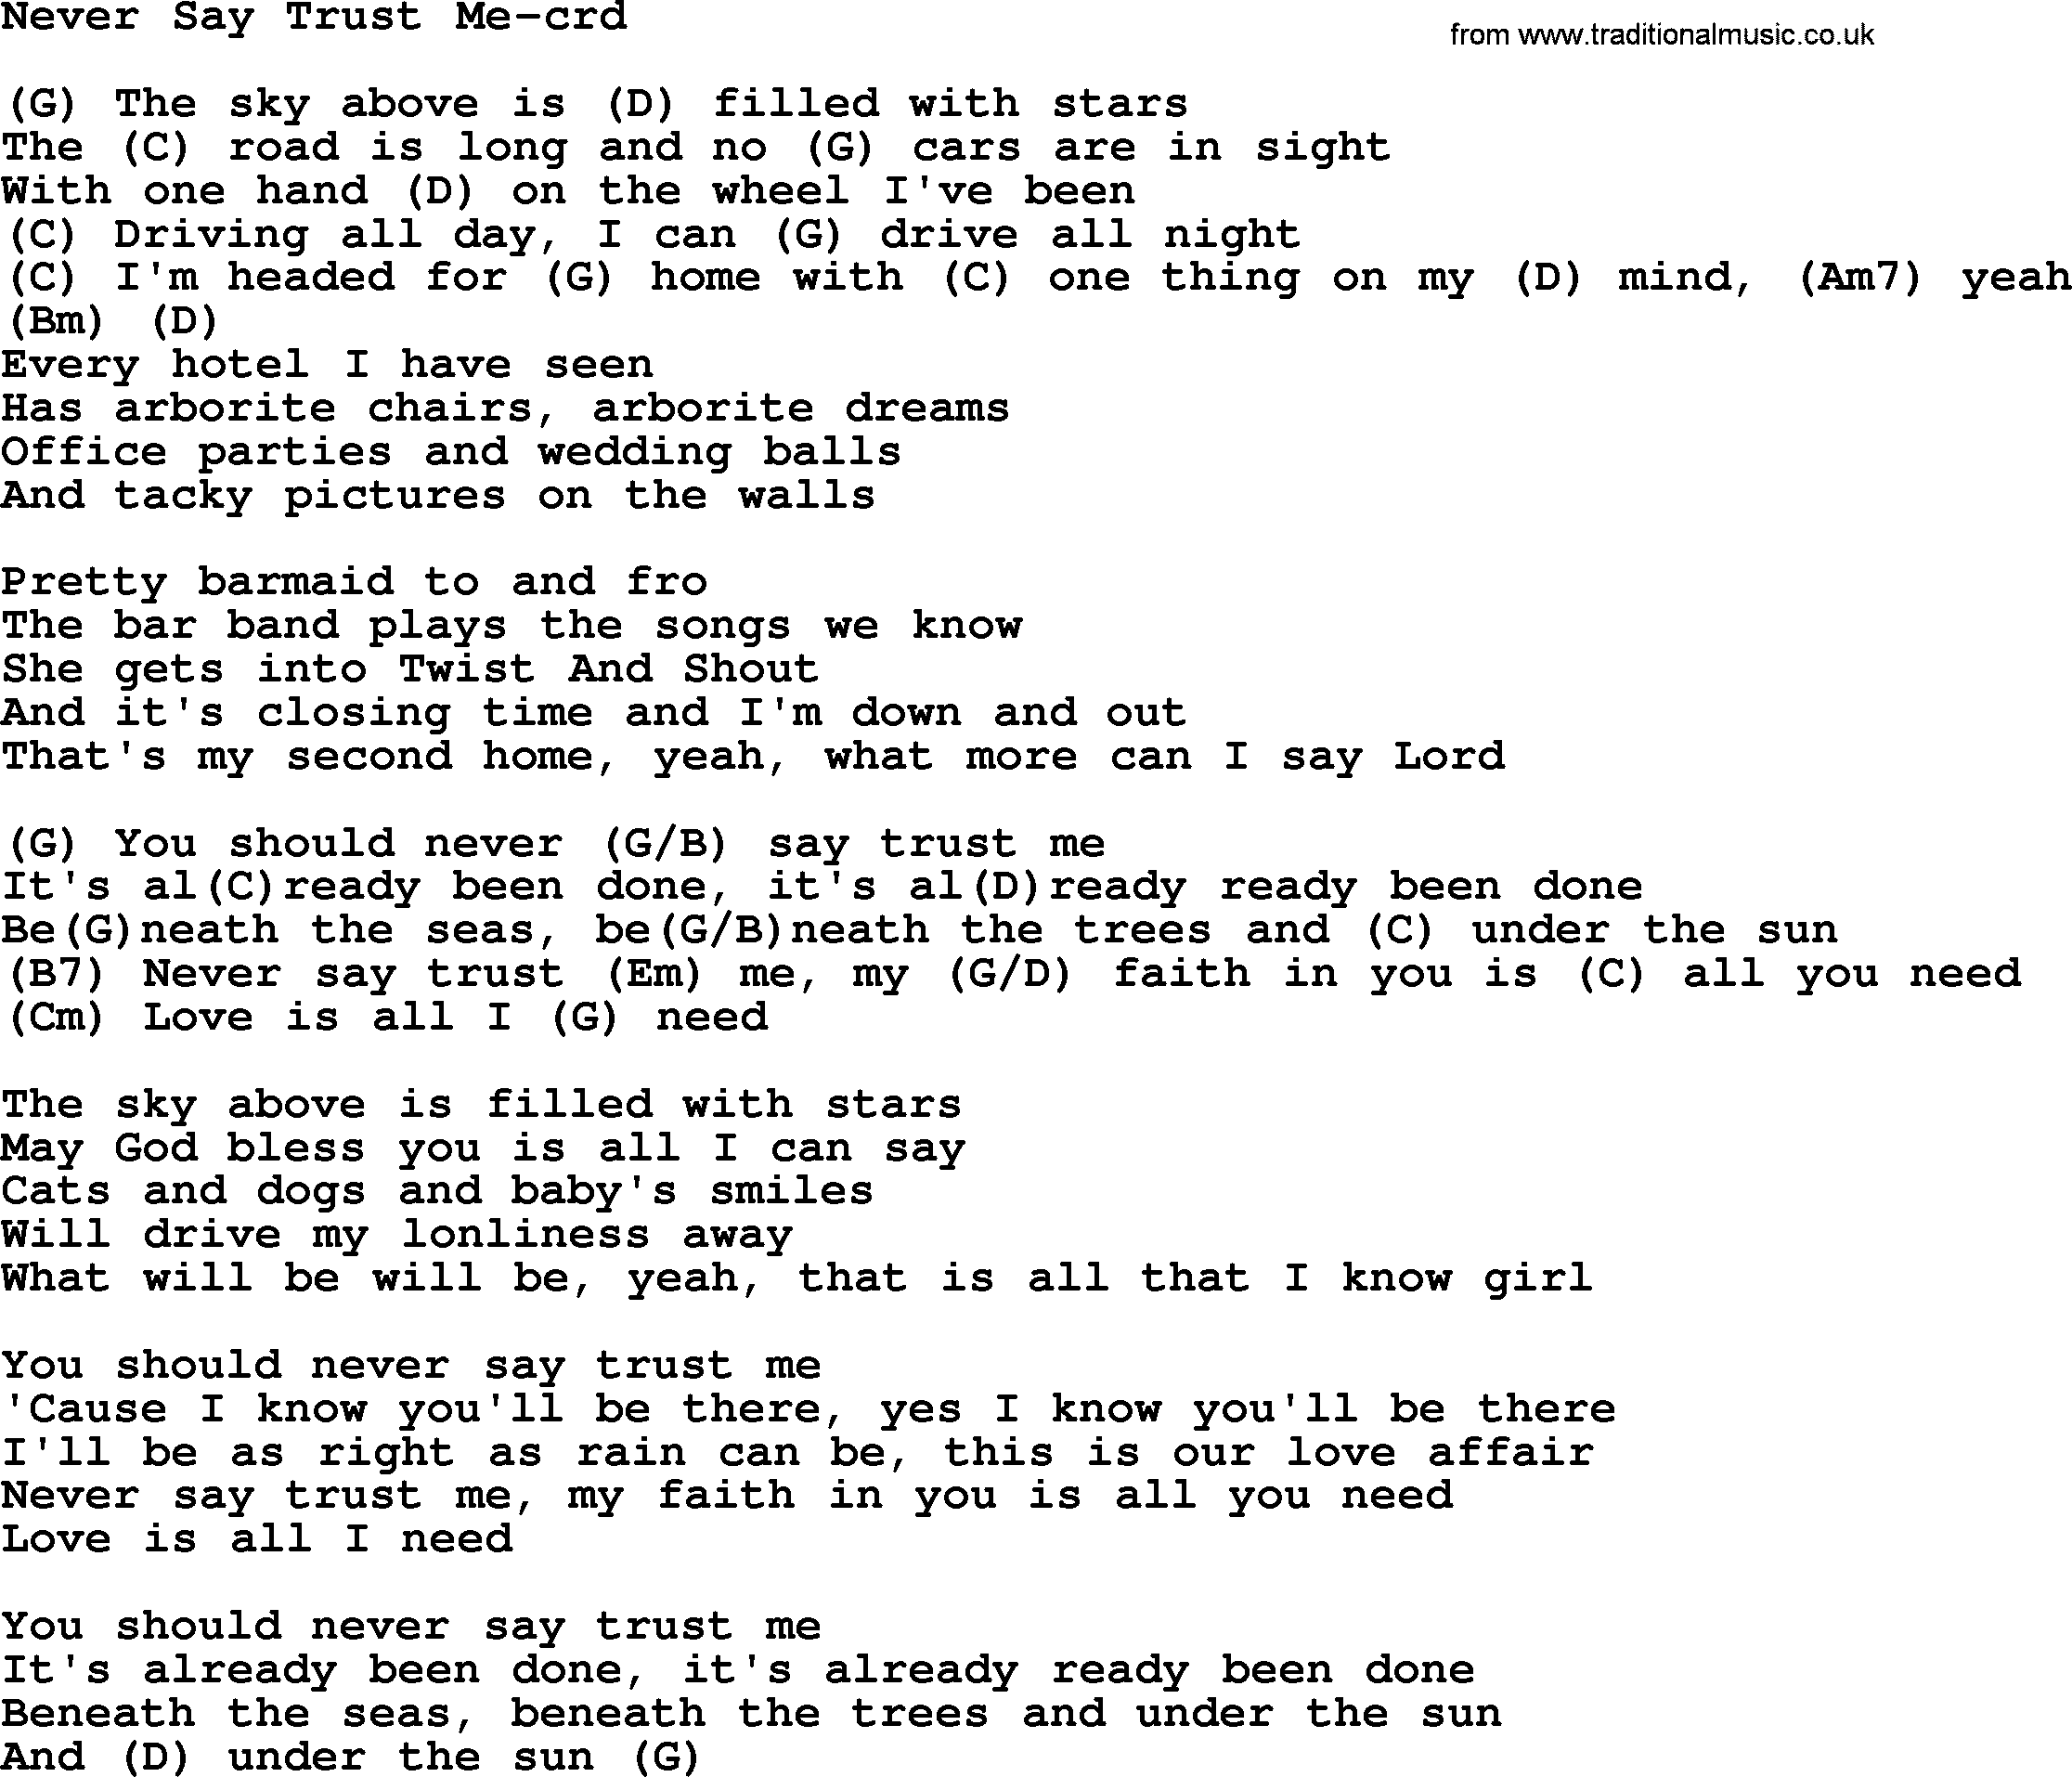 Gordon Lightfoot song Never Say Trust Me, lyrics and chords